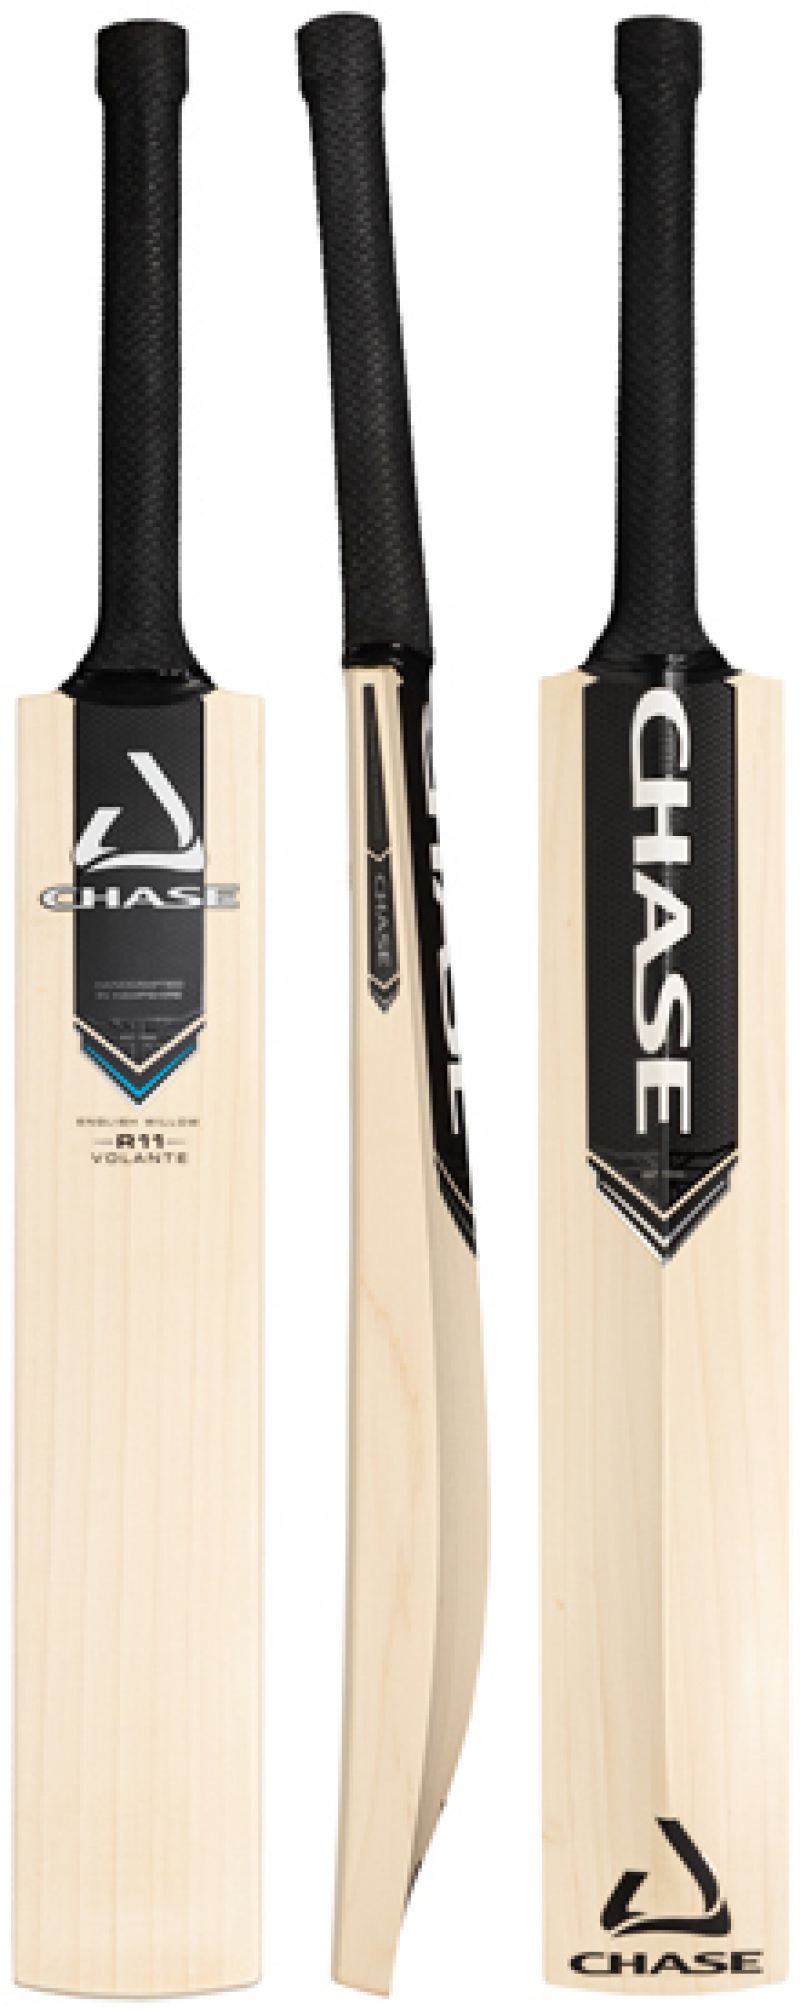 Chase Volante R11 Cricket Bat